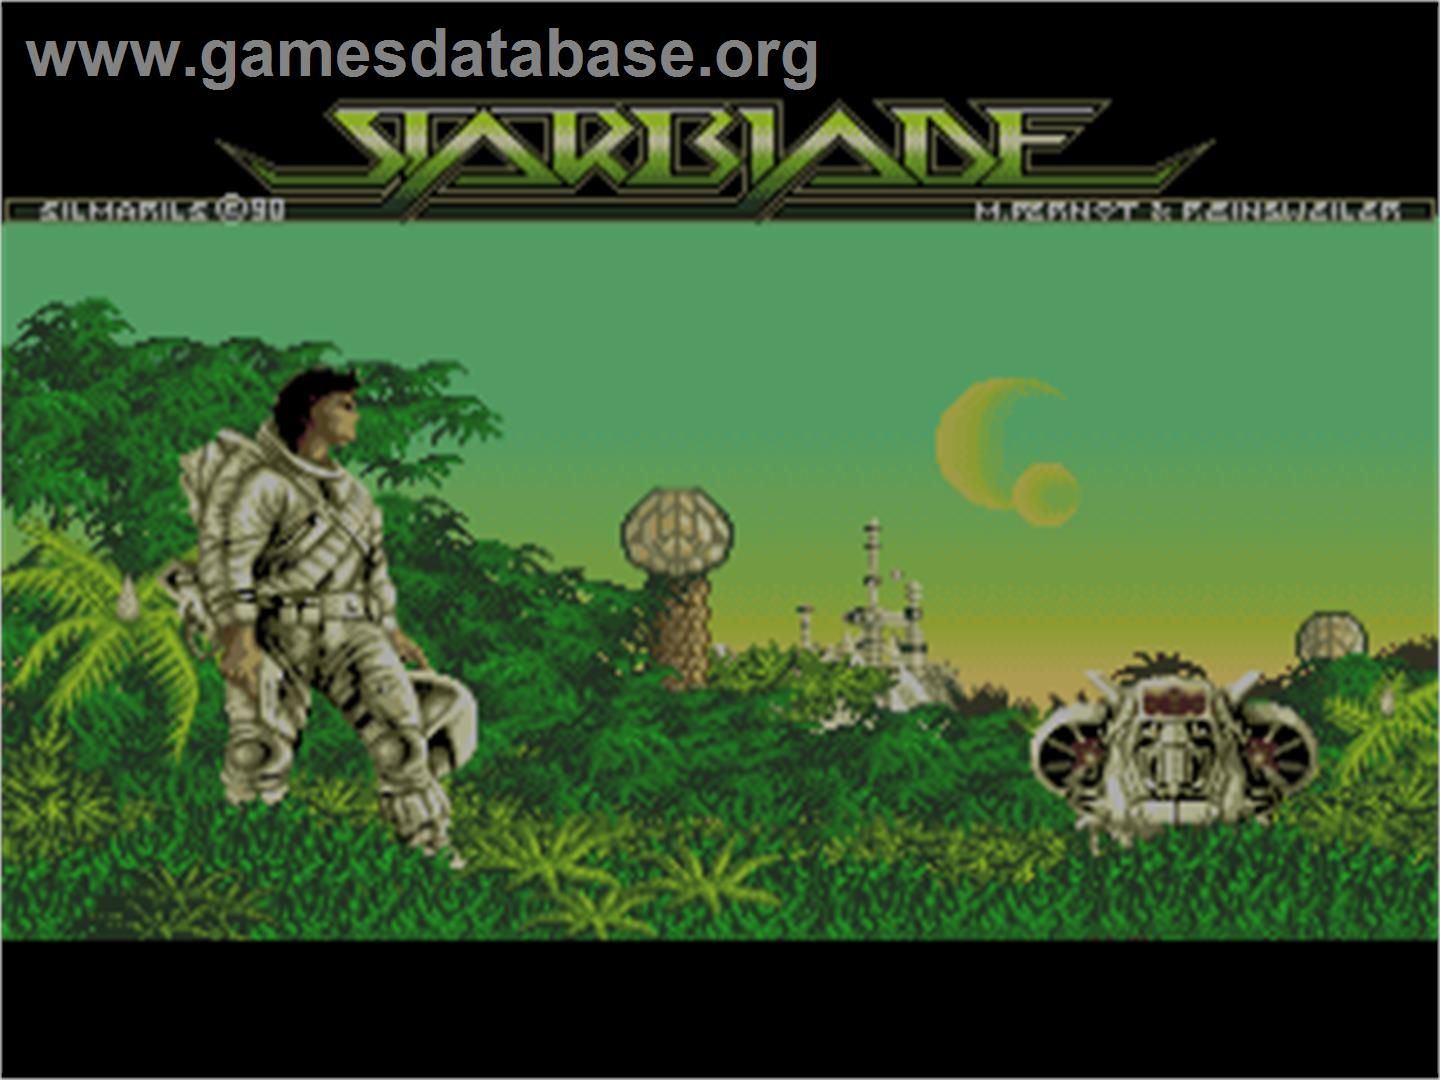 Starblade - Commodore Amiga - Artwork - Title Screen